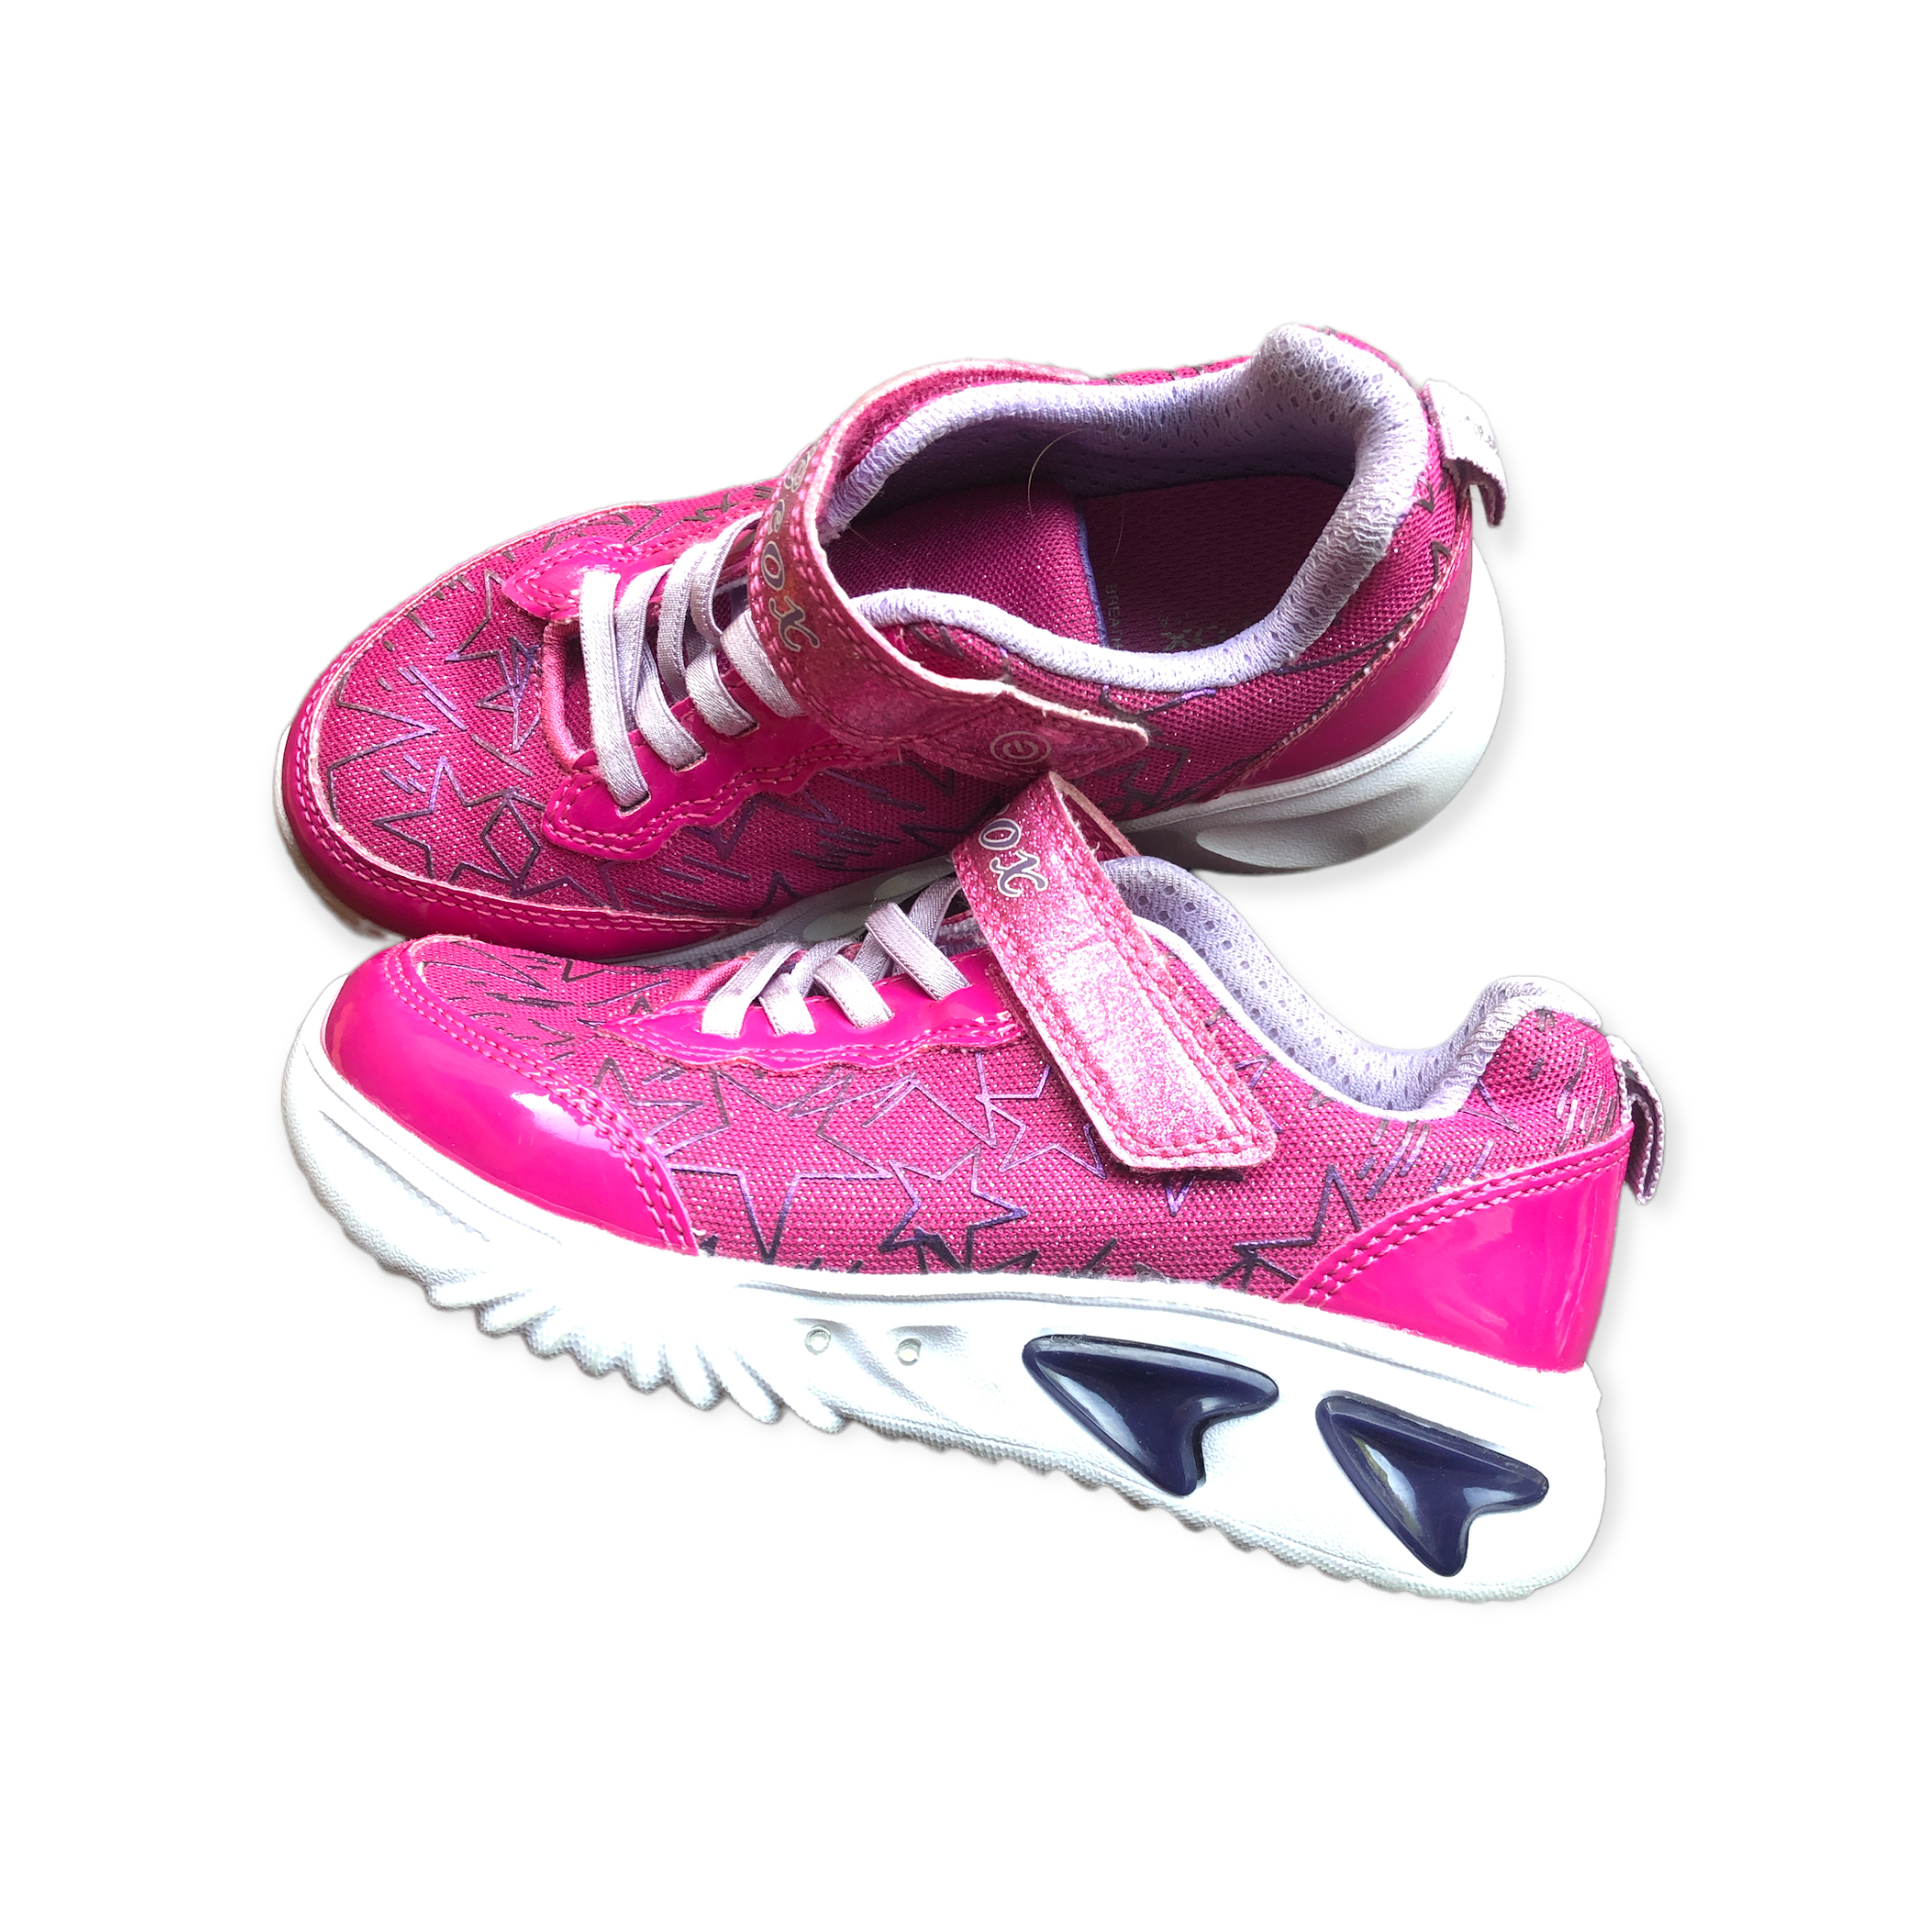 Preloved Geox roze sportschoenen met lichtjes in zool ♥ maat 29